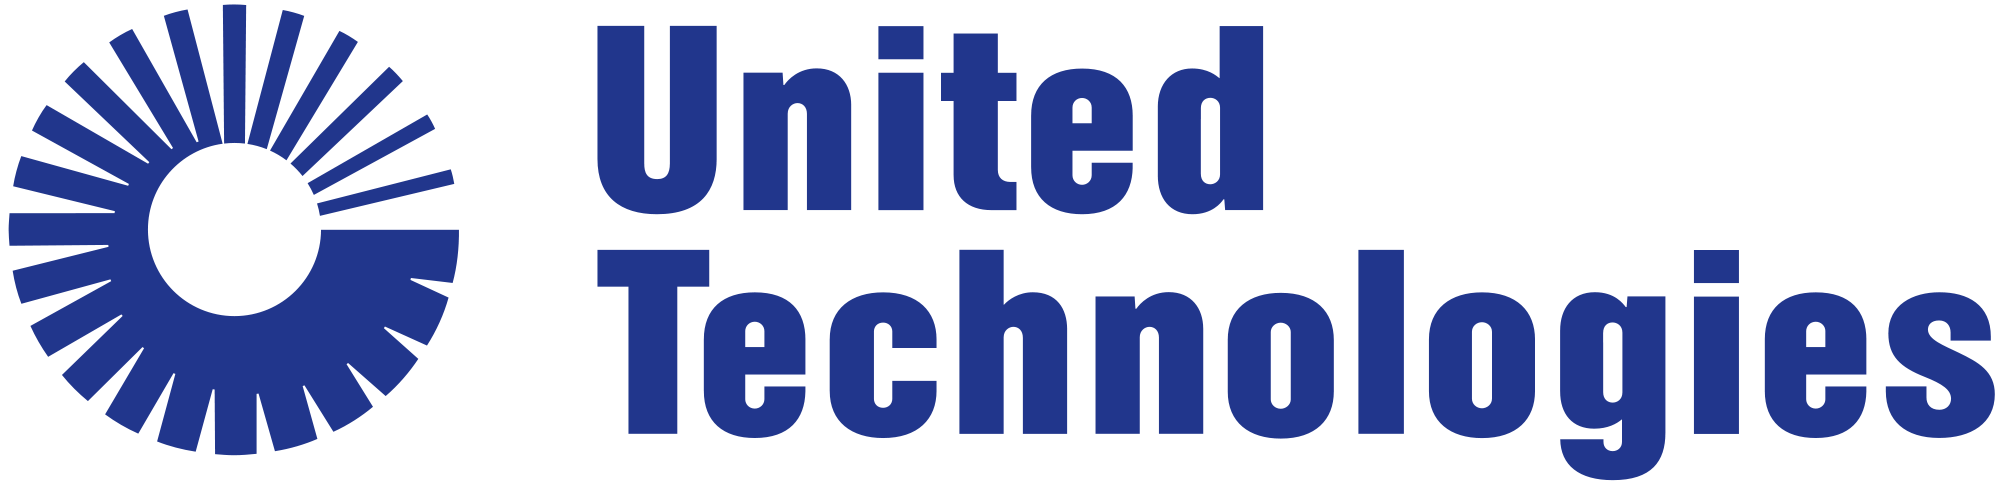 United Technologies Logo 01